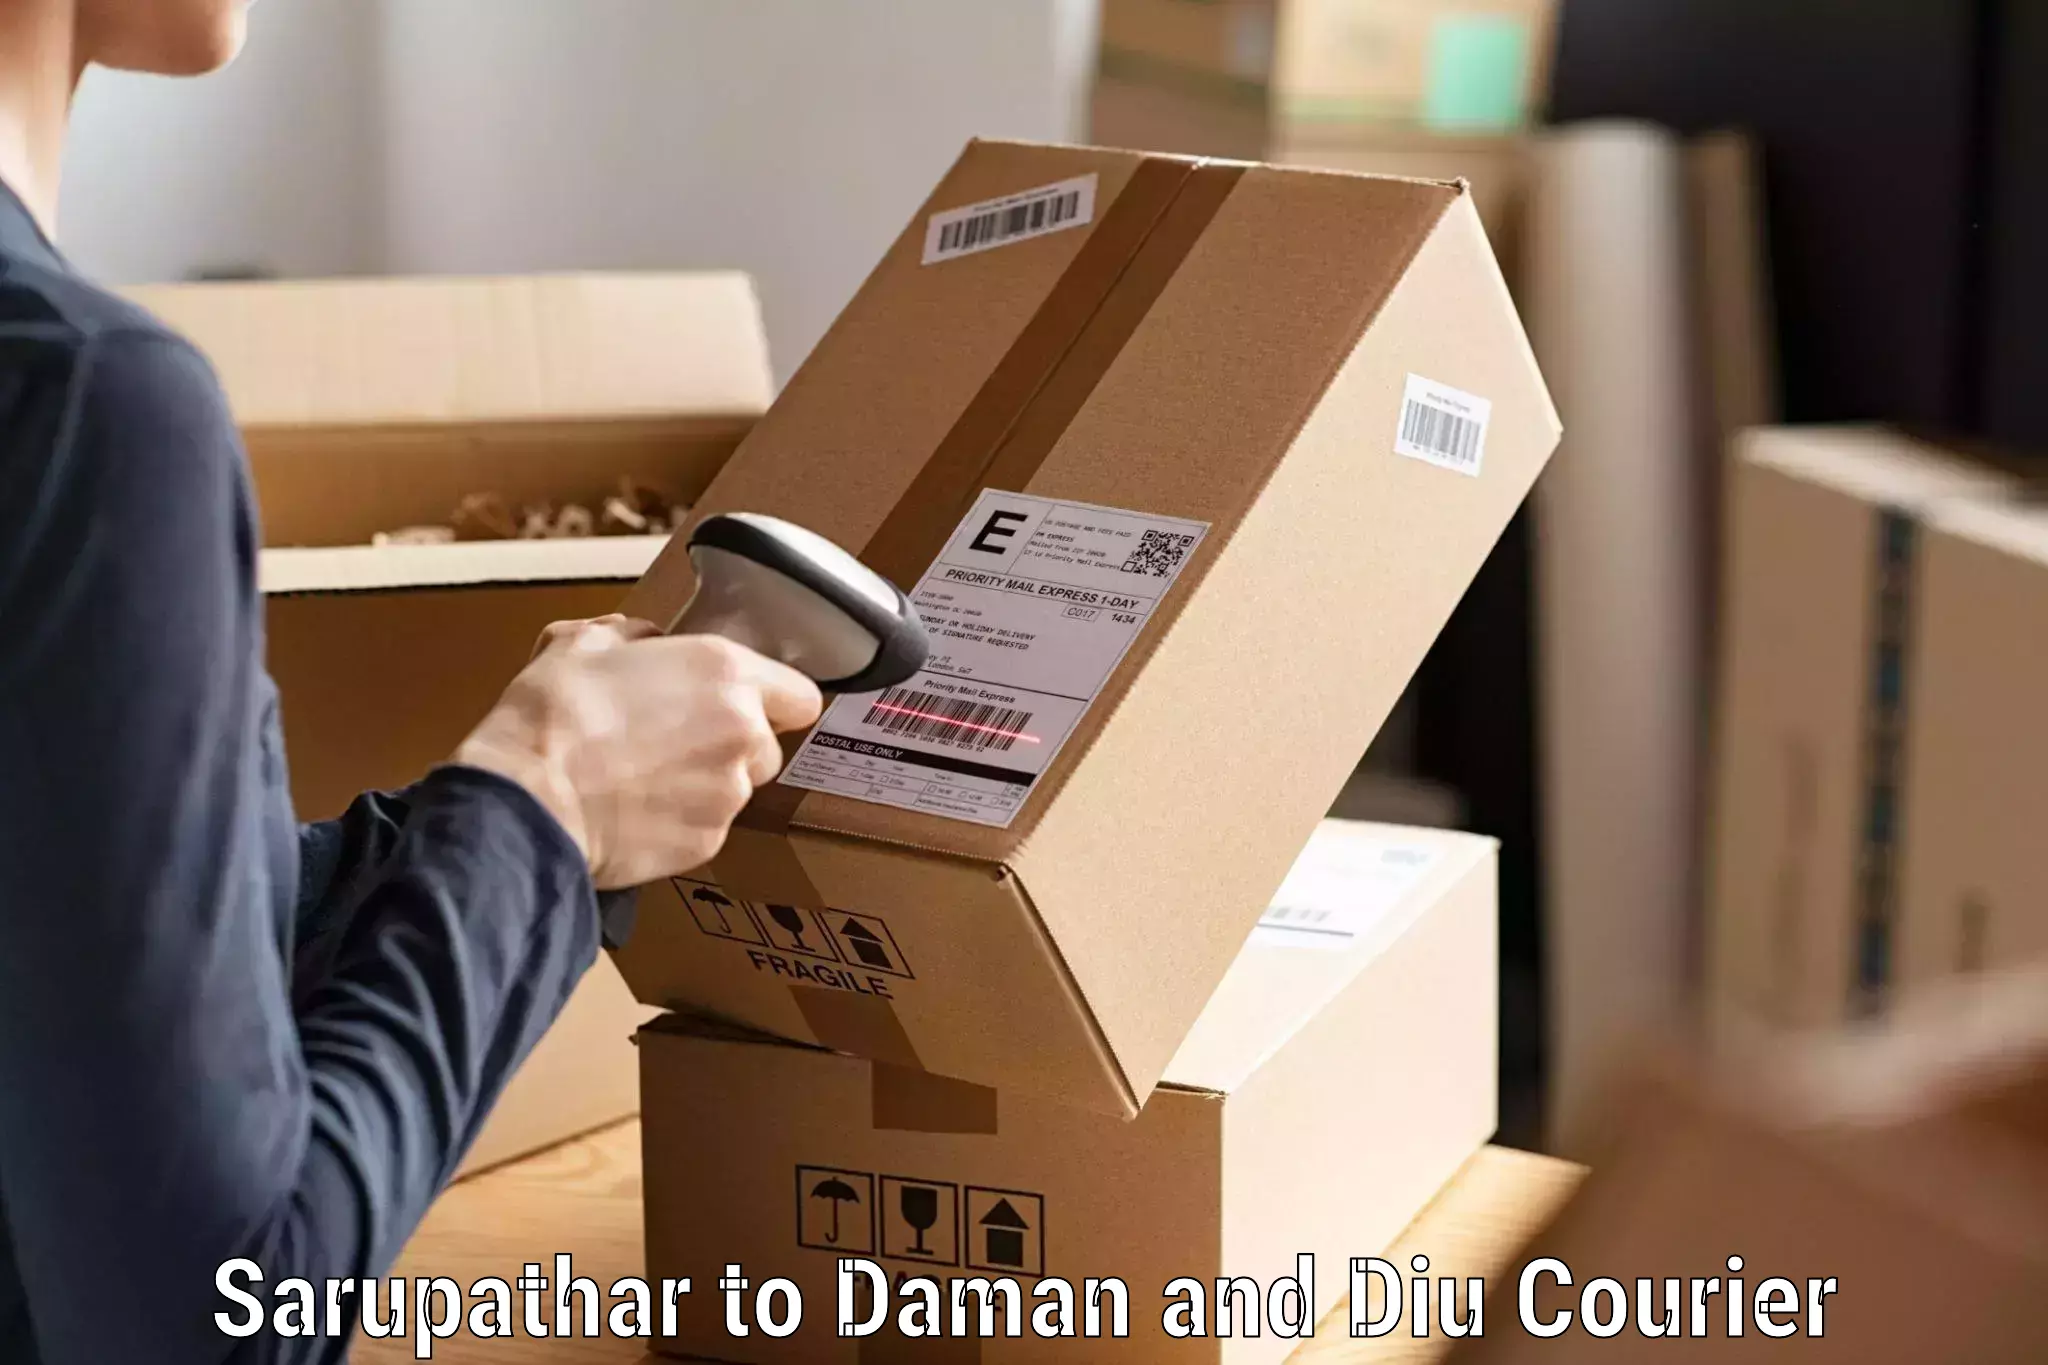 Parcel handling and care Sarupathar to Daman and Diu